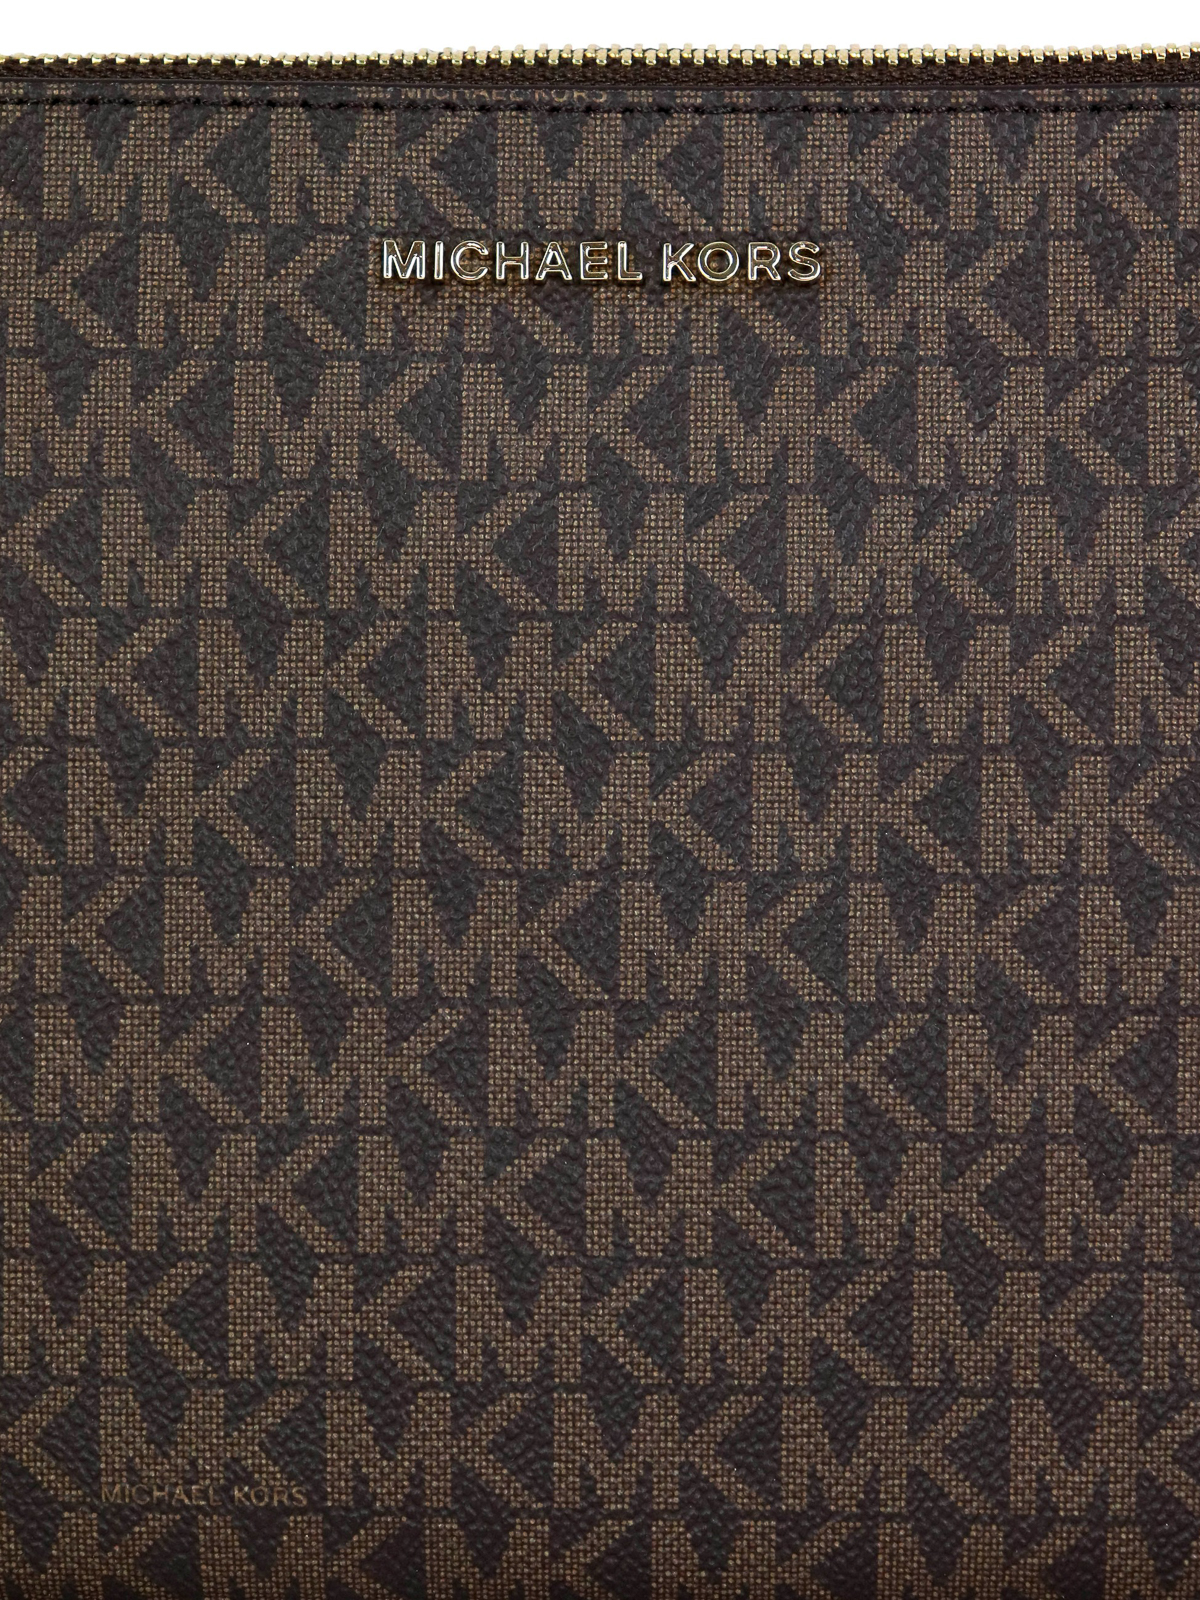 Michael Kors Adele MD Leather Messenger Bag in Black/Cement (35T8SAFM2 –  Rafaelos